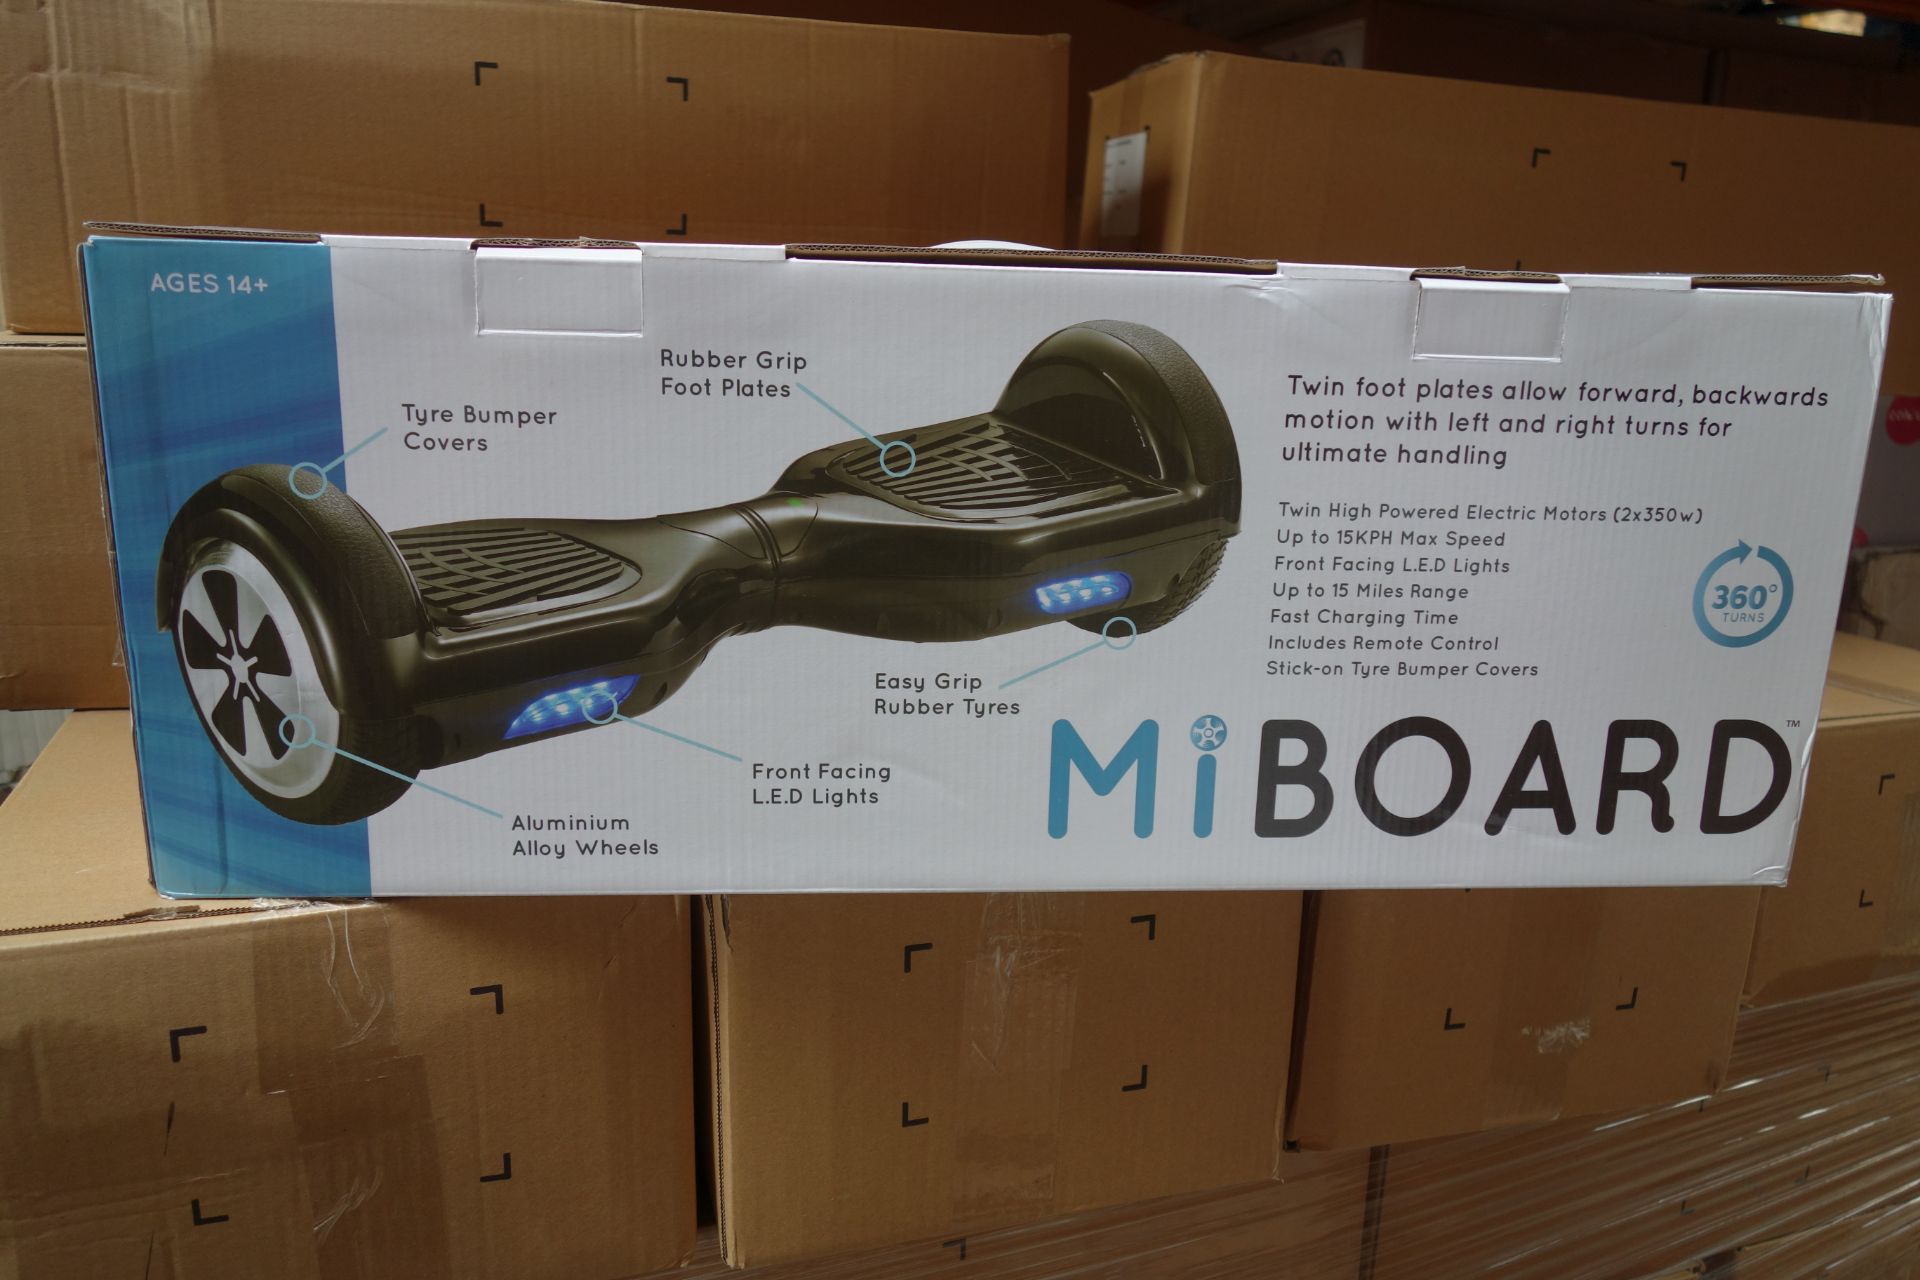 1 x MiBoard Electric Balance Board - High Quality. Original RRP £499.99. Rubber Grip Foot Plates,